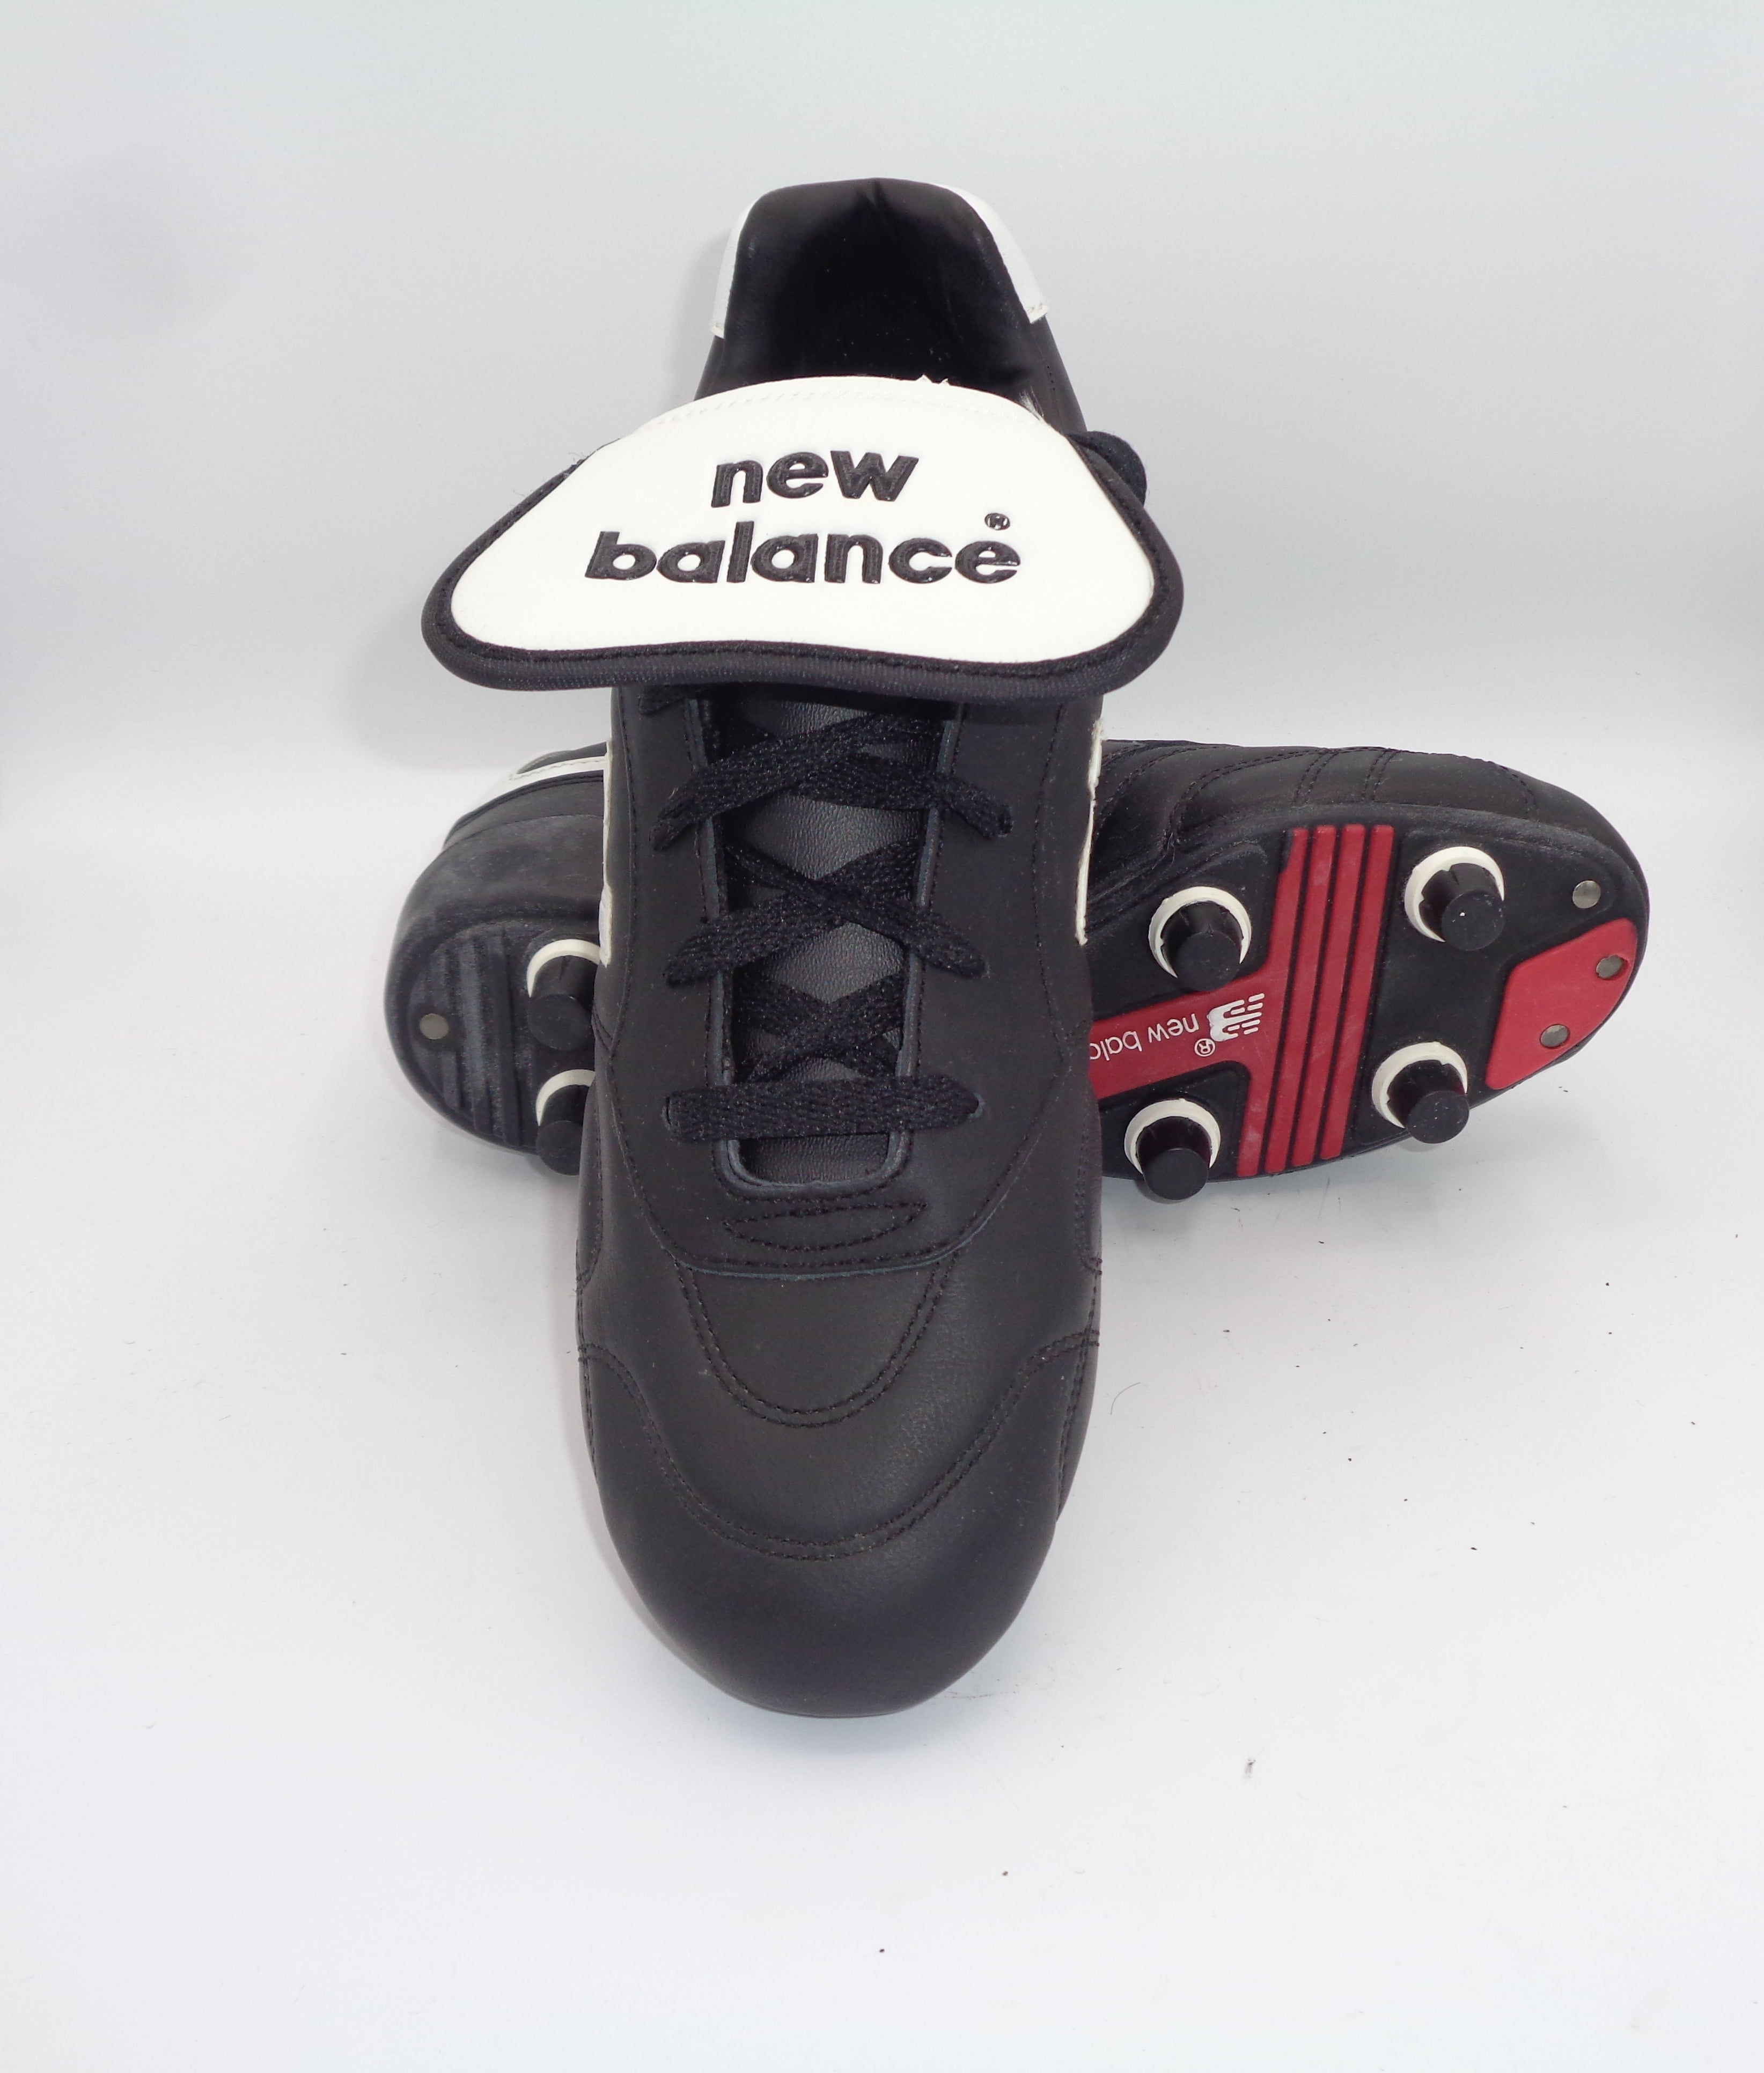 NEW BALANCE STRIKER FOOTBALL BOOTS - NEW BALANCE - SIZE 5.5